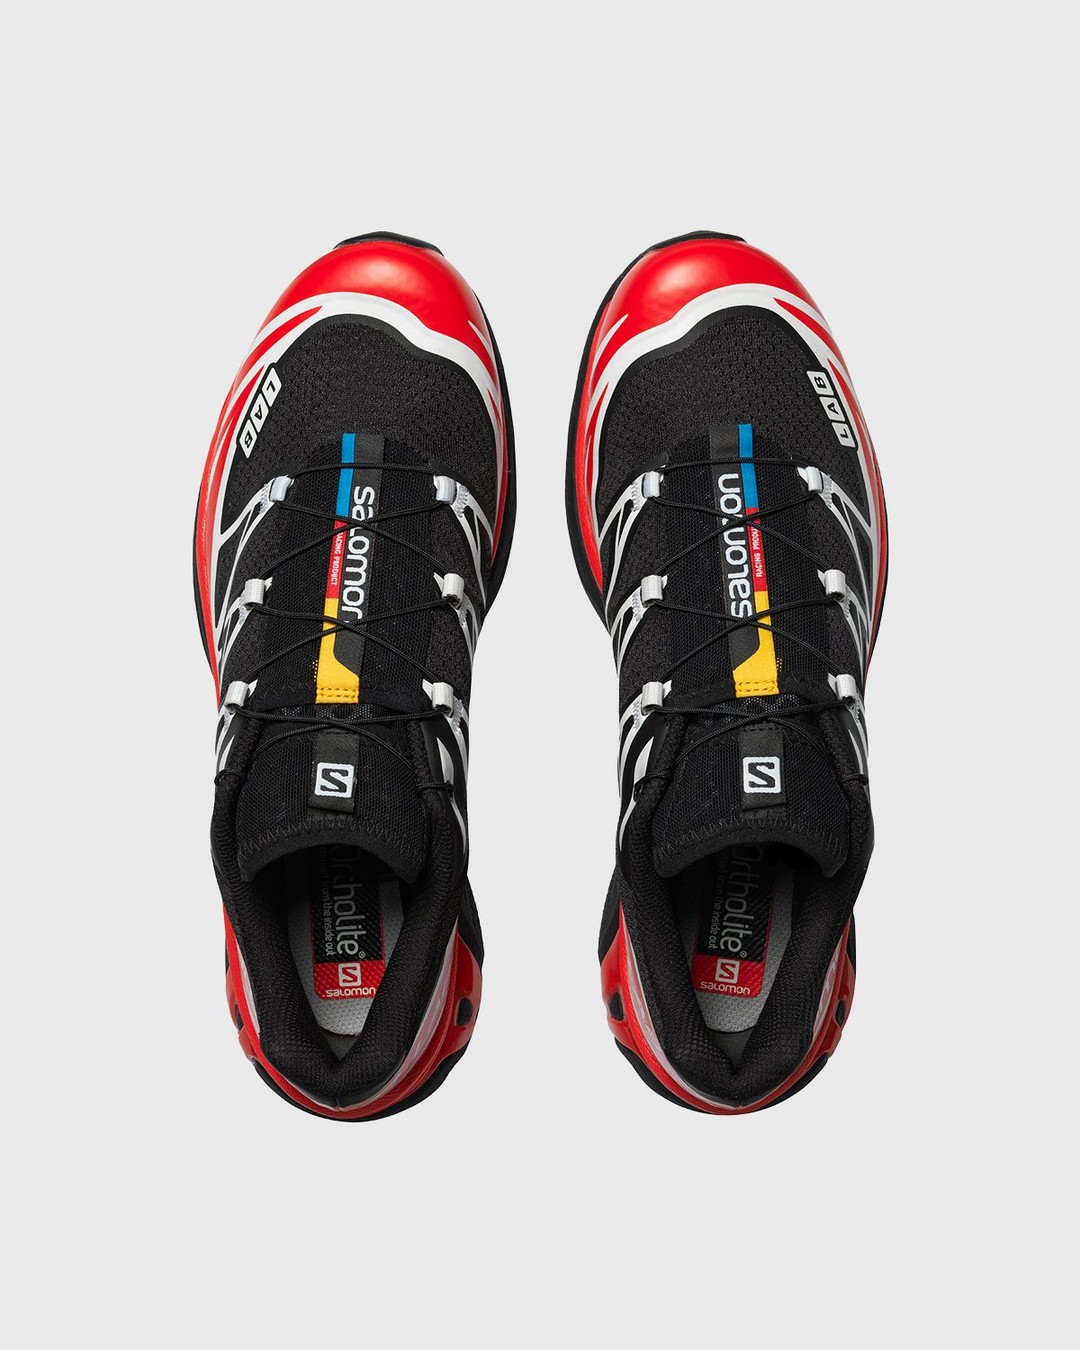 Salomon – XT-6 ADVANCED Black/ Racing Red/ White - Low Top Sneakers - Black - Image 4